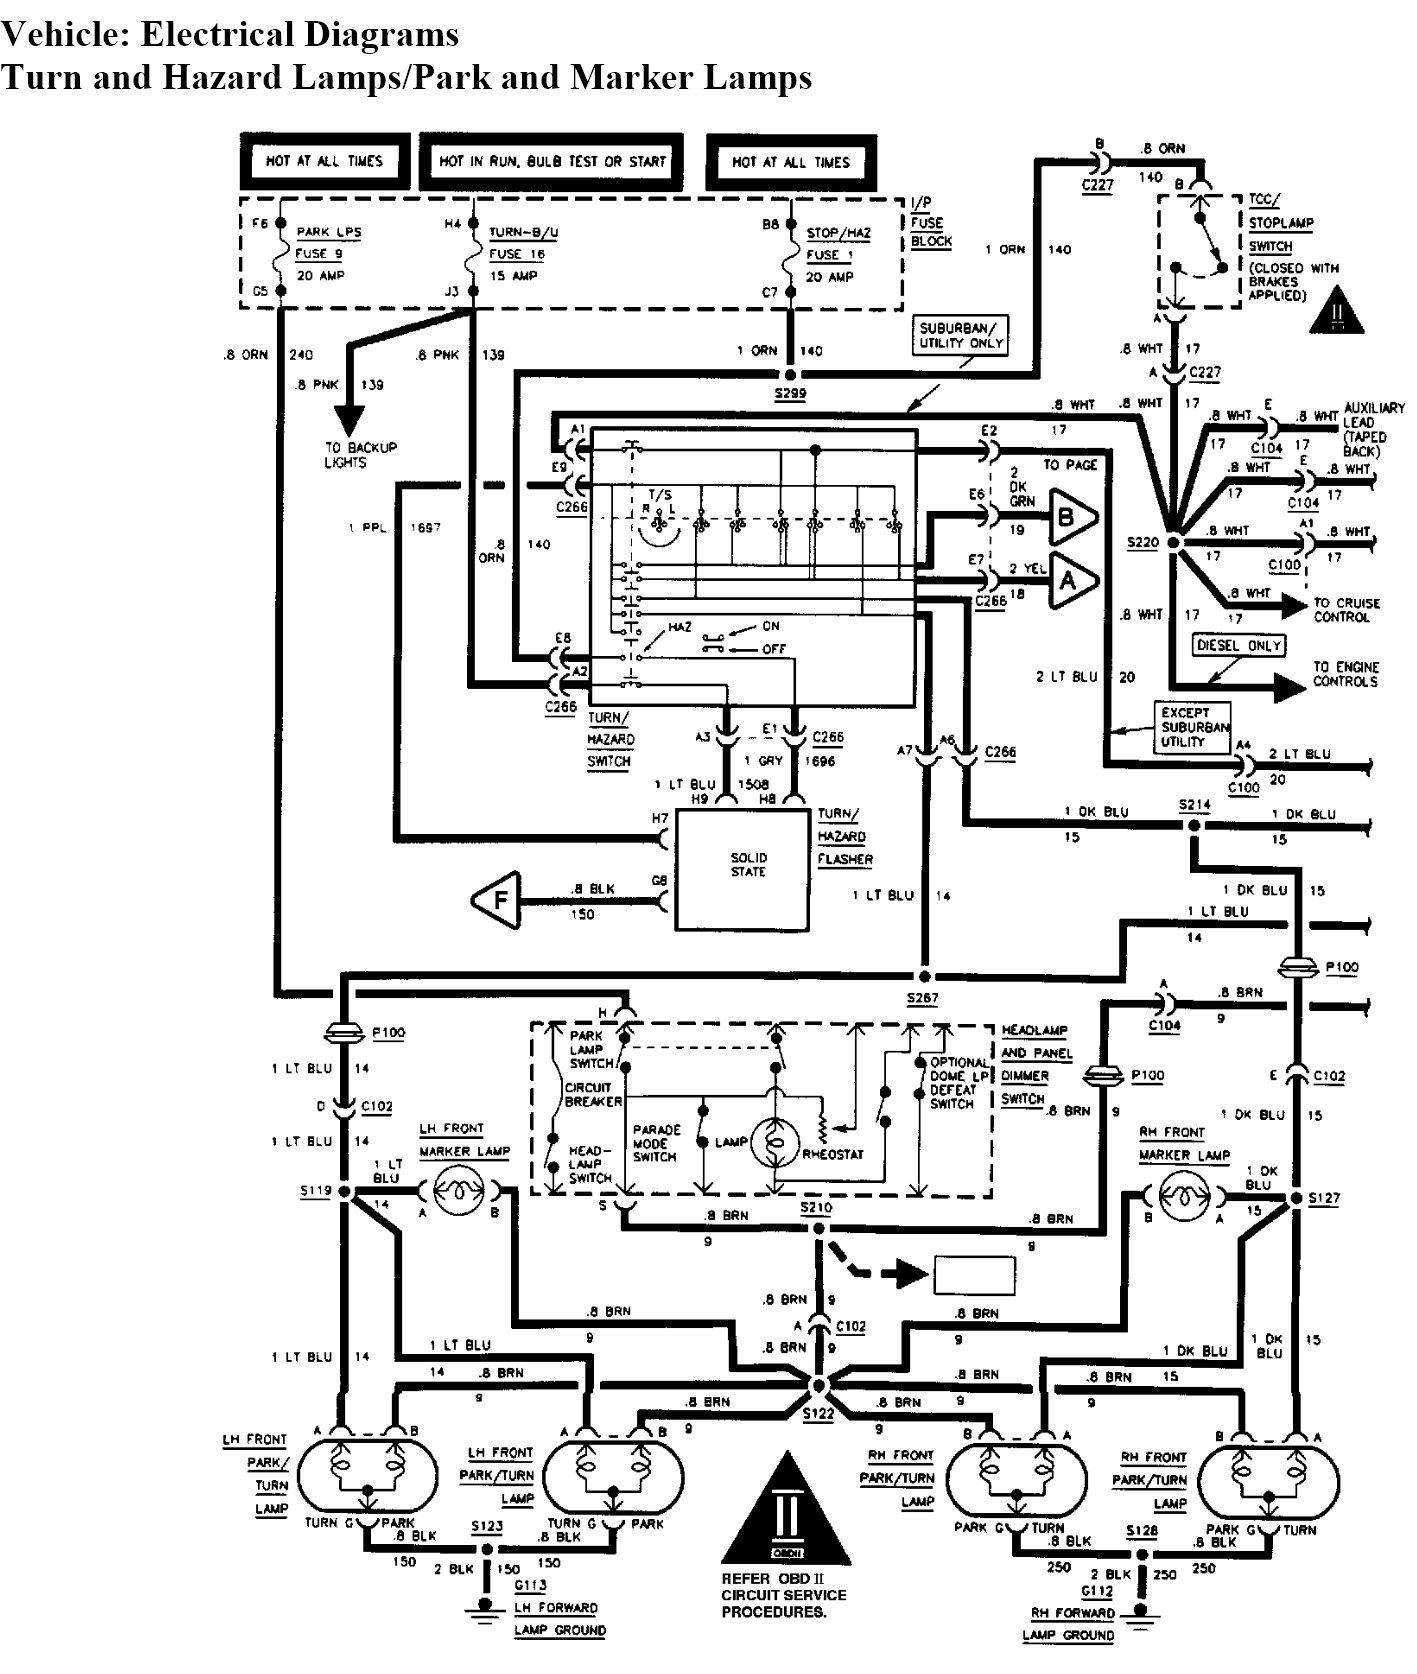 1987 Chevy Truck Wiring Diagram 1983 Chevy Truck Vacuum Line Diagram Chevrolet Wiring Diagrams Types Of 1987 Chevy Truck Wiring Diagram